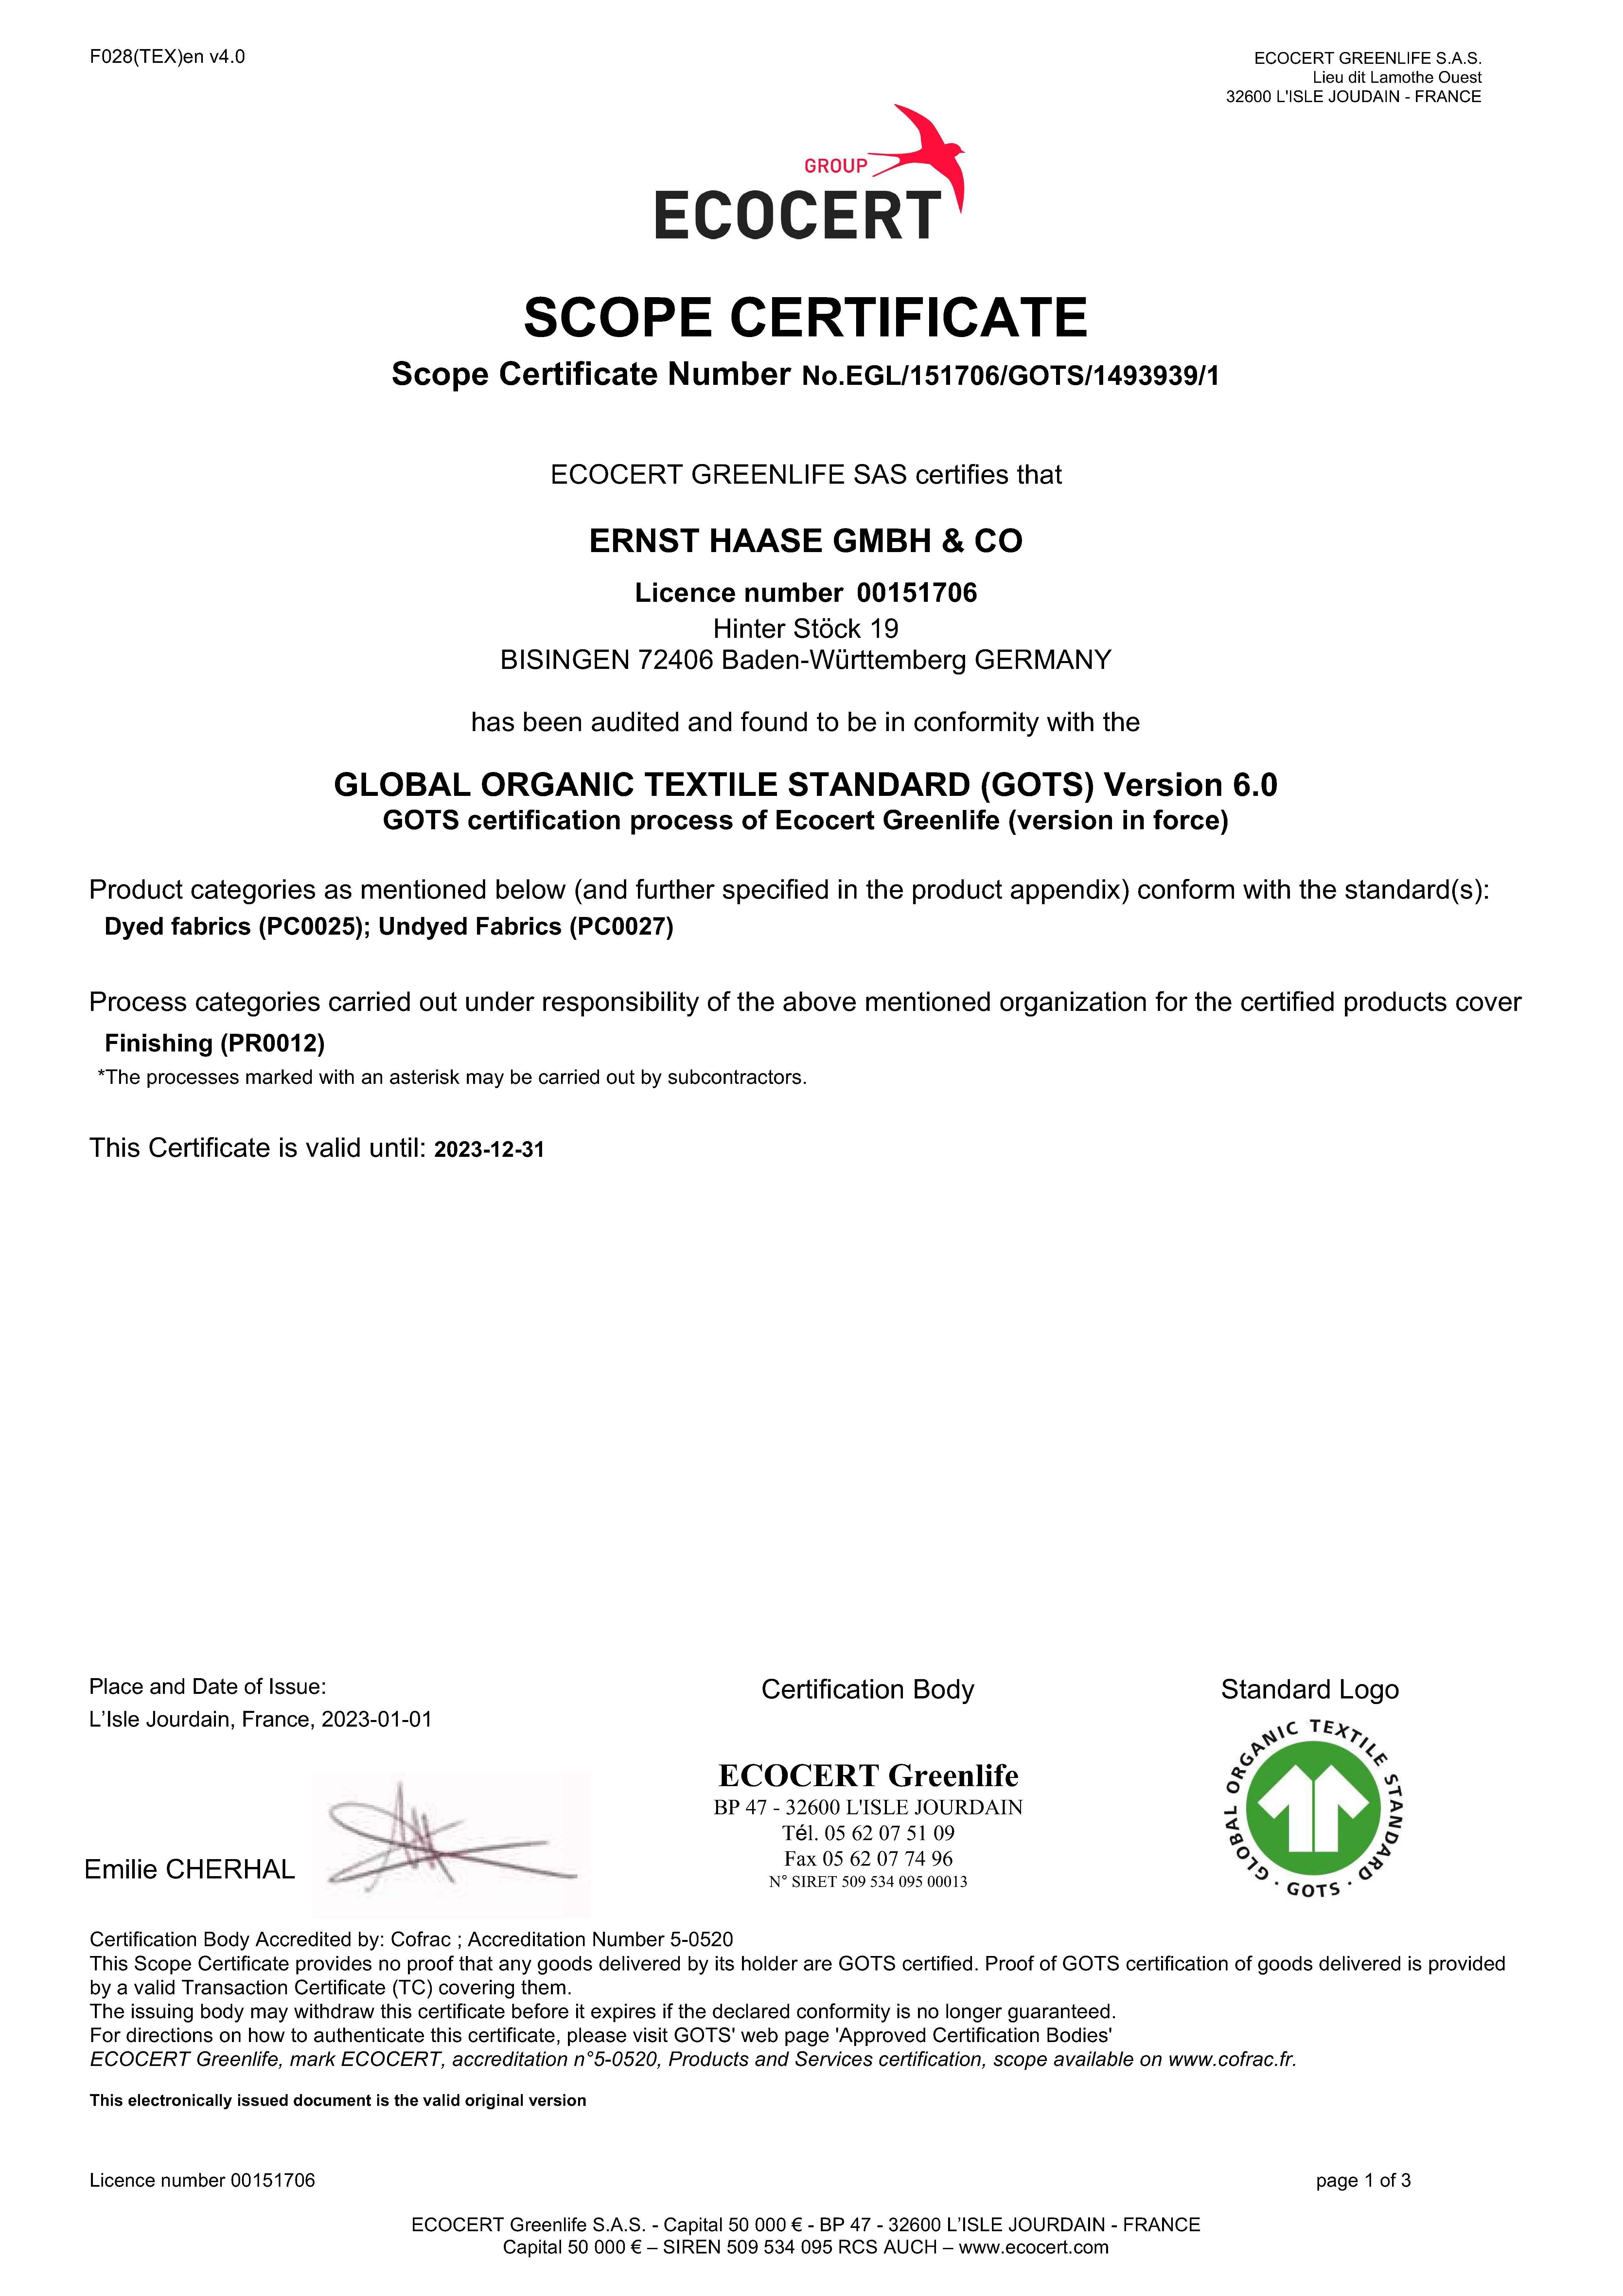 Zertifikat Global Organic Textile Standard